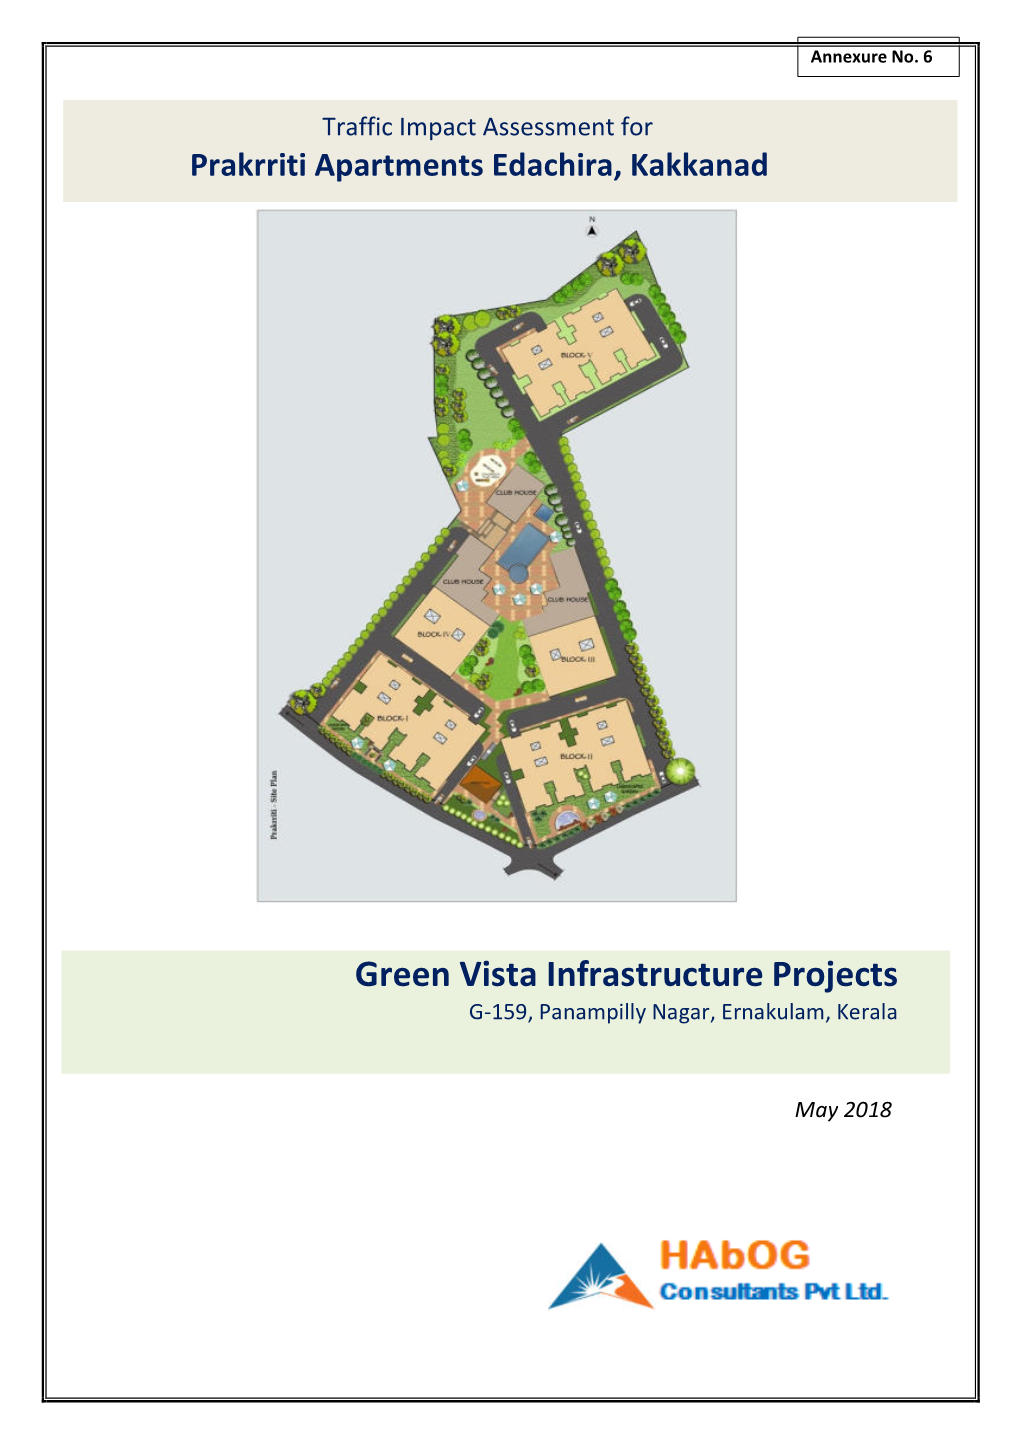 Green Vista Infrastructure Projects G-159, Panampilly Nagar, Ernakulam, Kerala